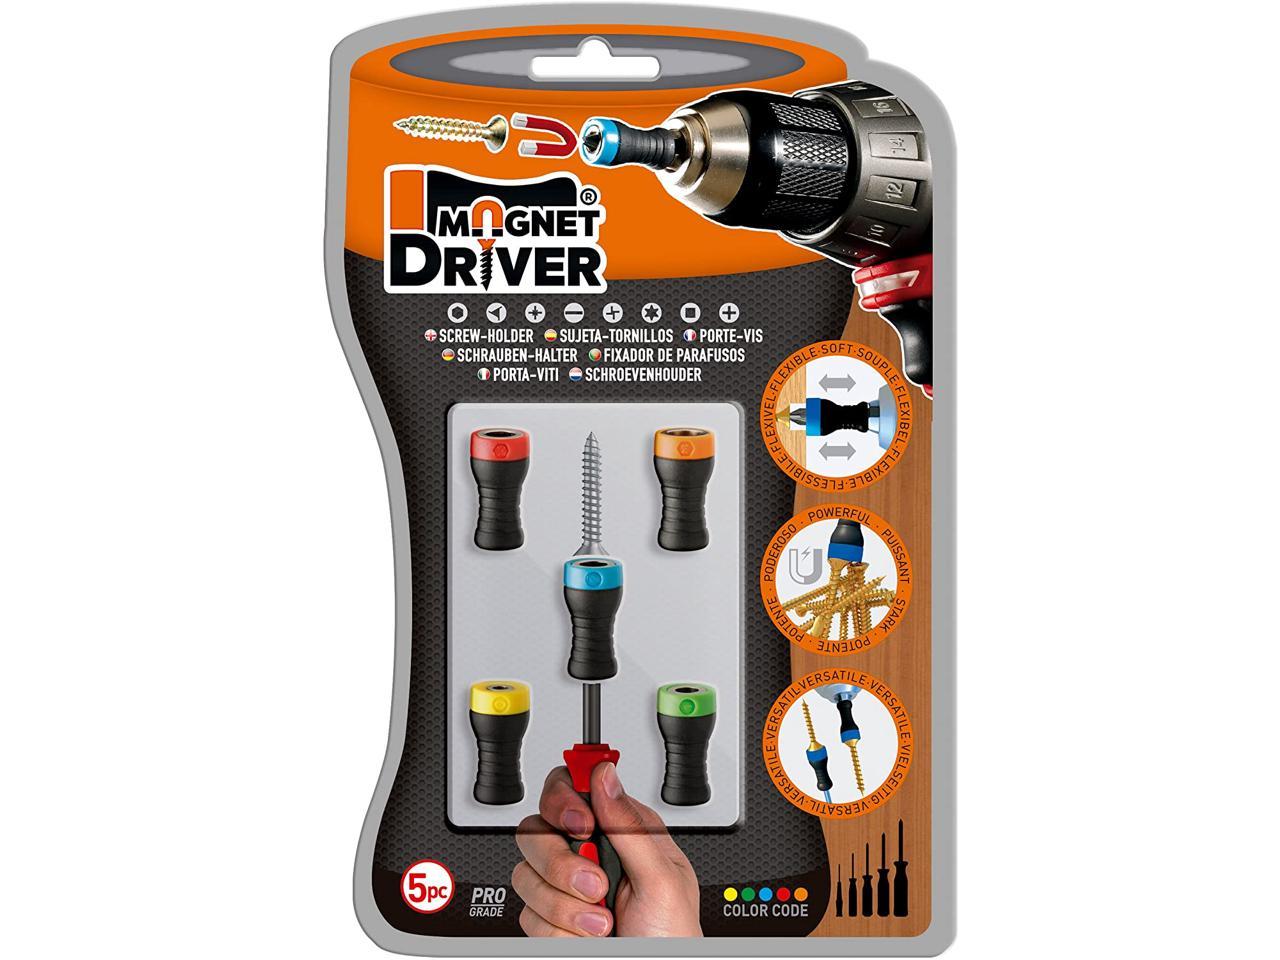 Fits Screwdrivers/Drills Magnet Driver B50 Screw Holder Magnetic Attachment Set 